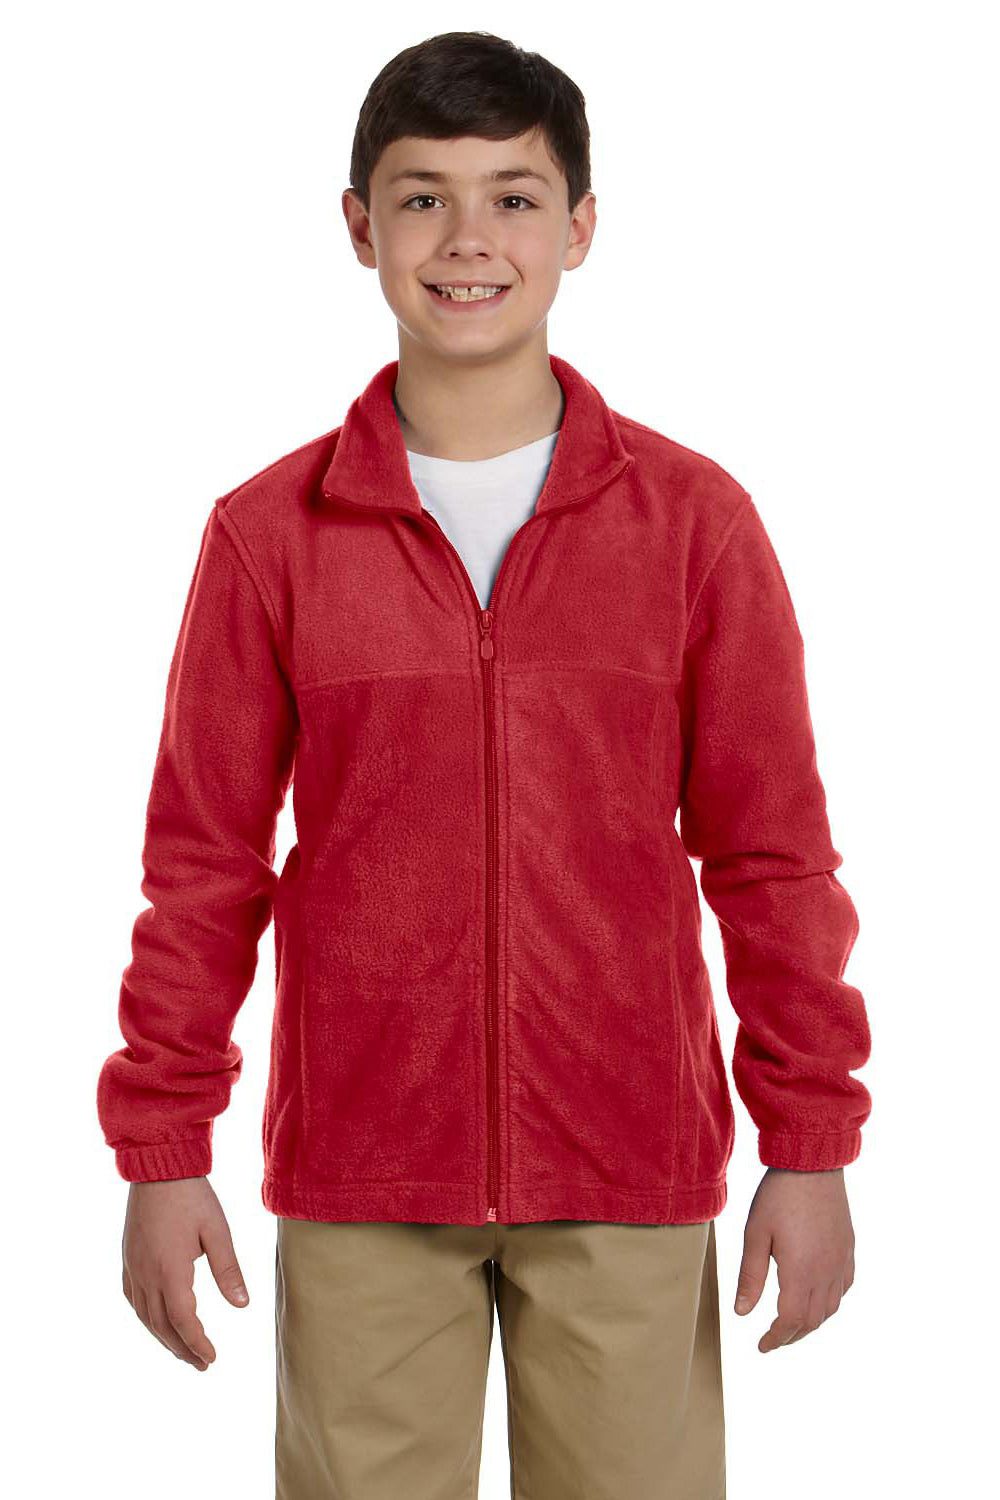 Harriton M990Y Youth Full Zip Fleece Jacket Red Front